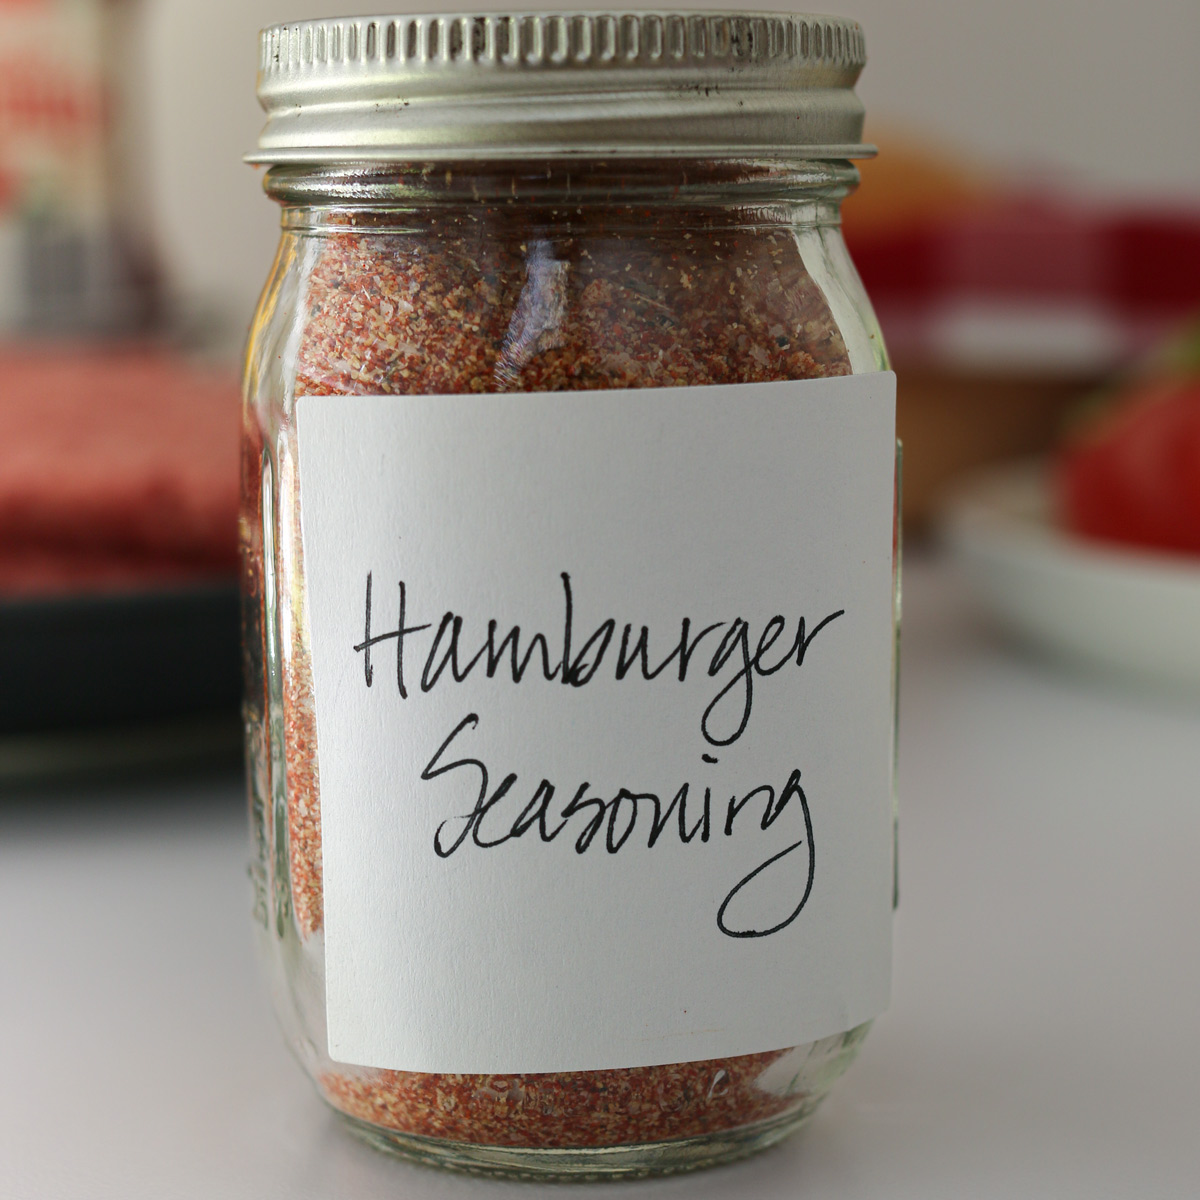 Hamburger Seasoning Mix, Recipe